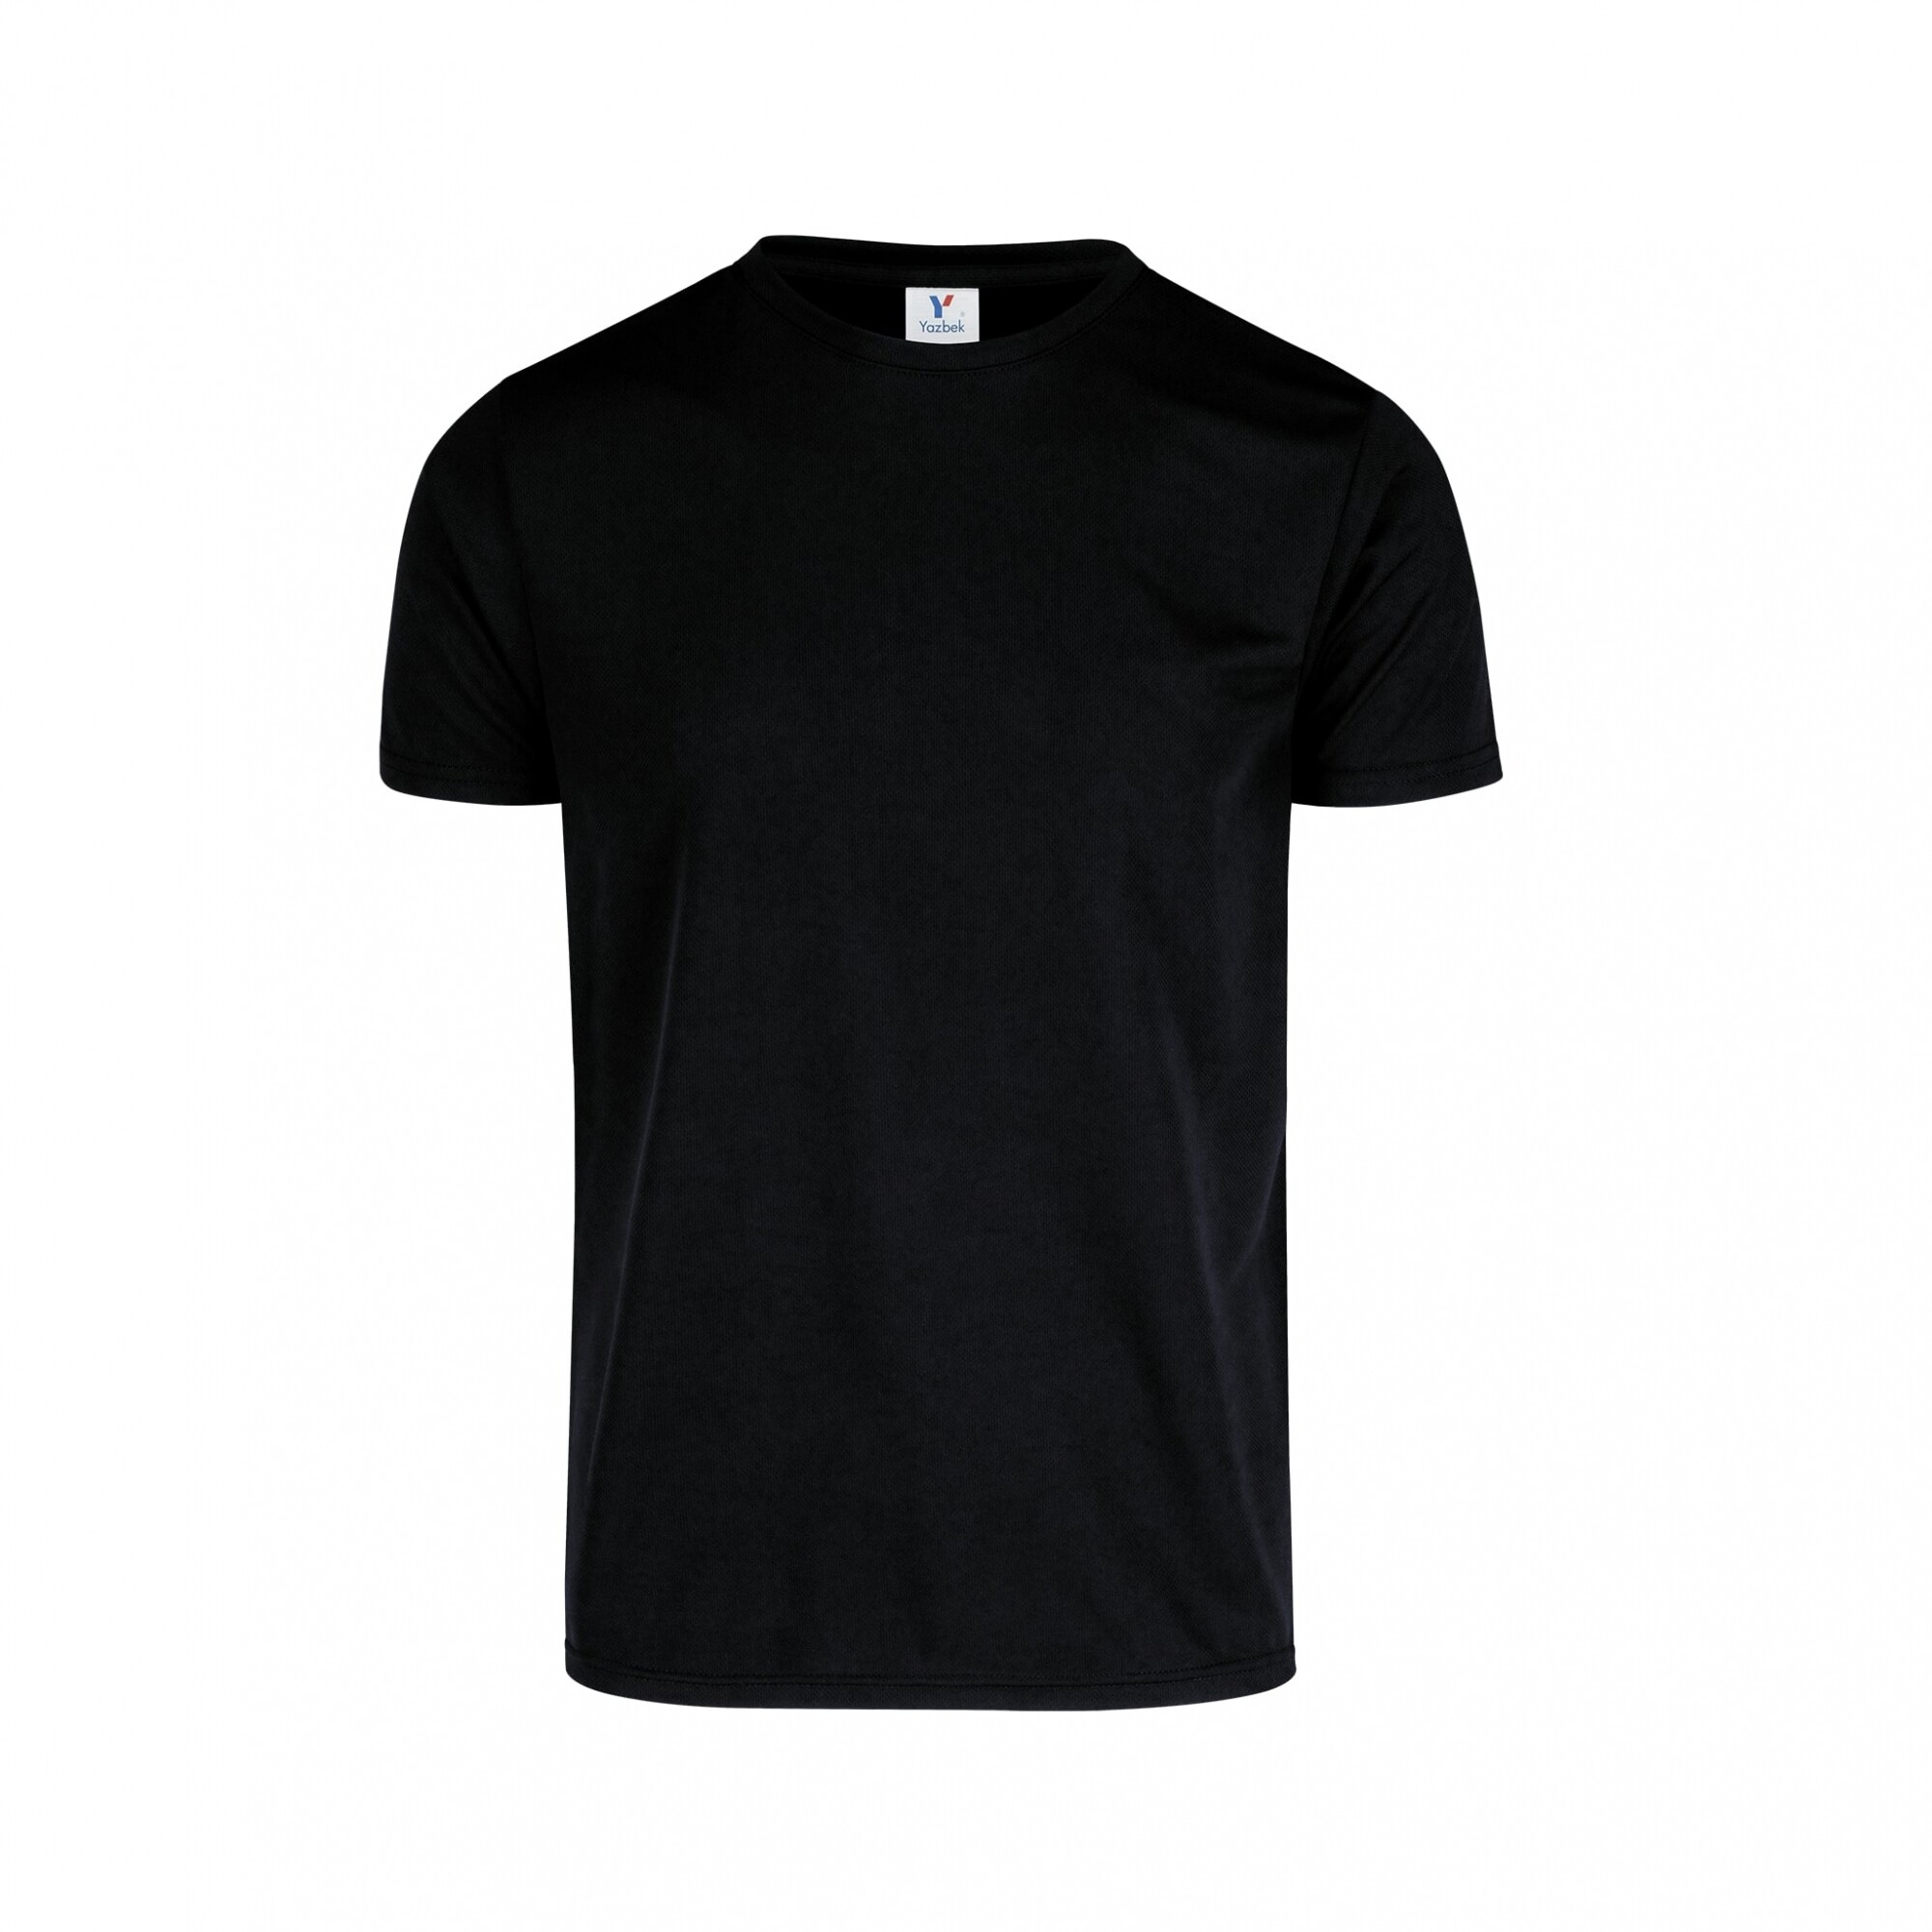 Camiseta a la base dry - Negro Indiewears